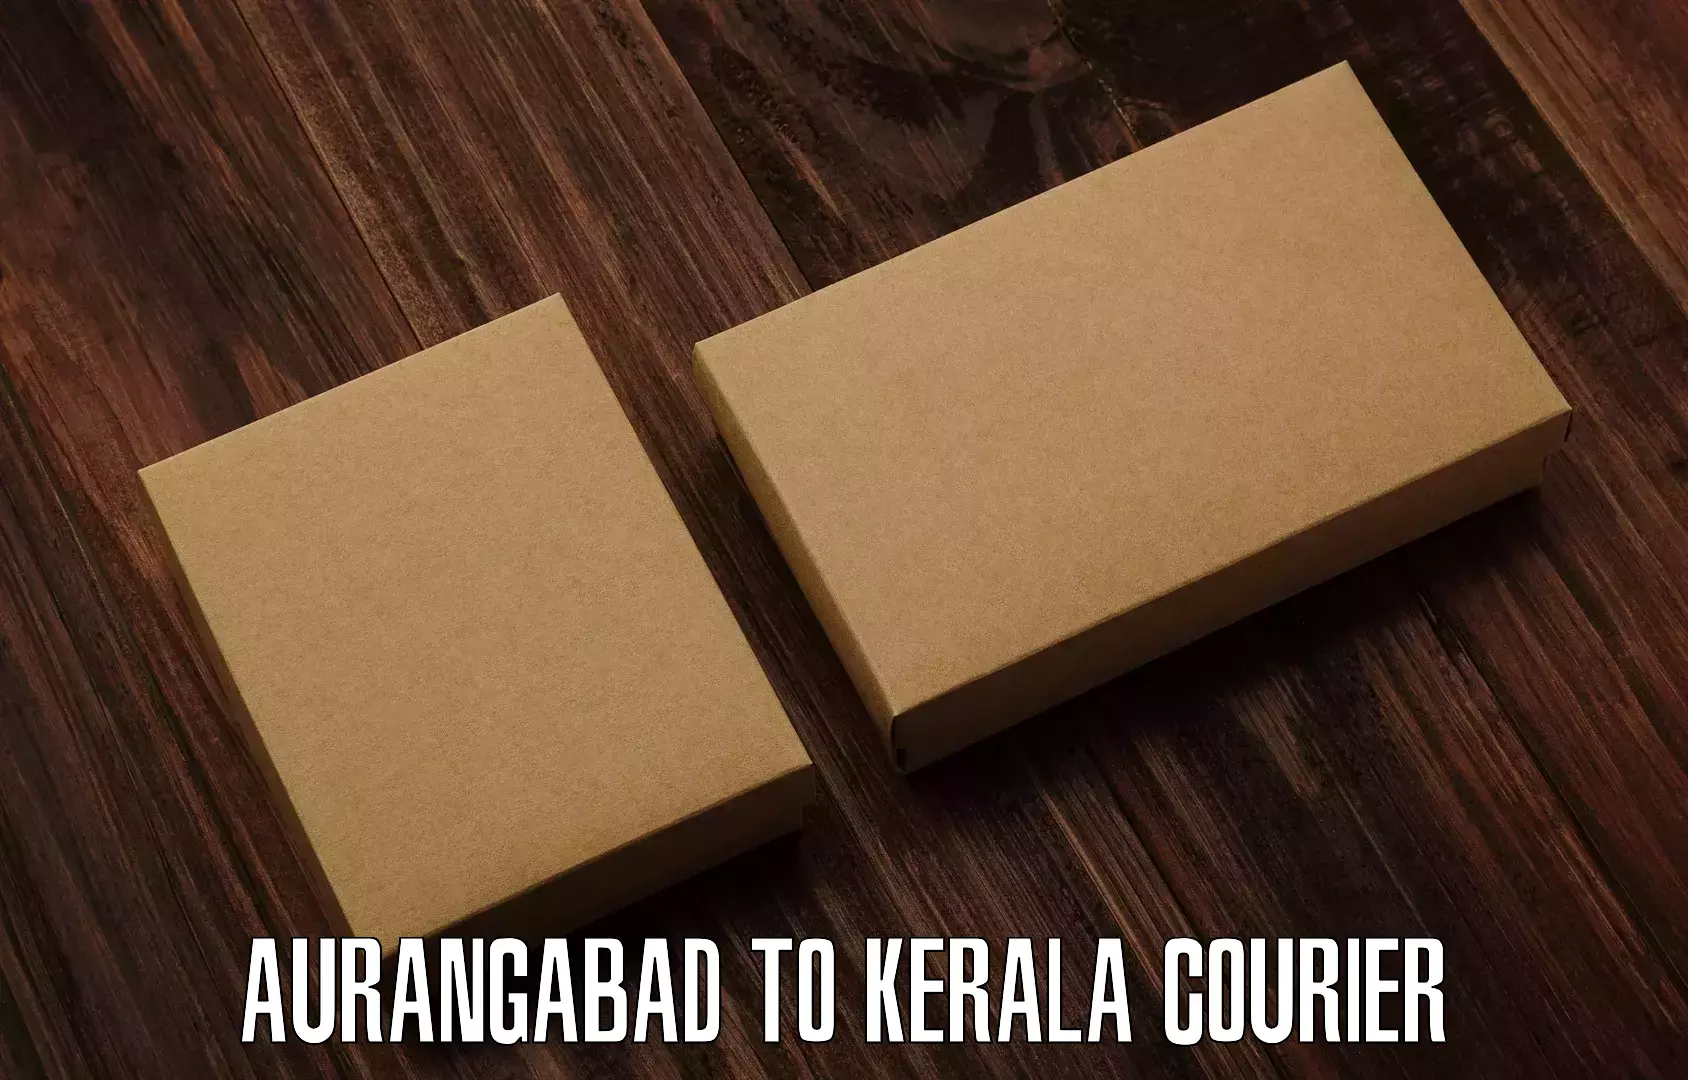 Courier service innovation Aurangabad to Cochin Port Kochi